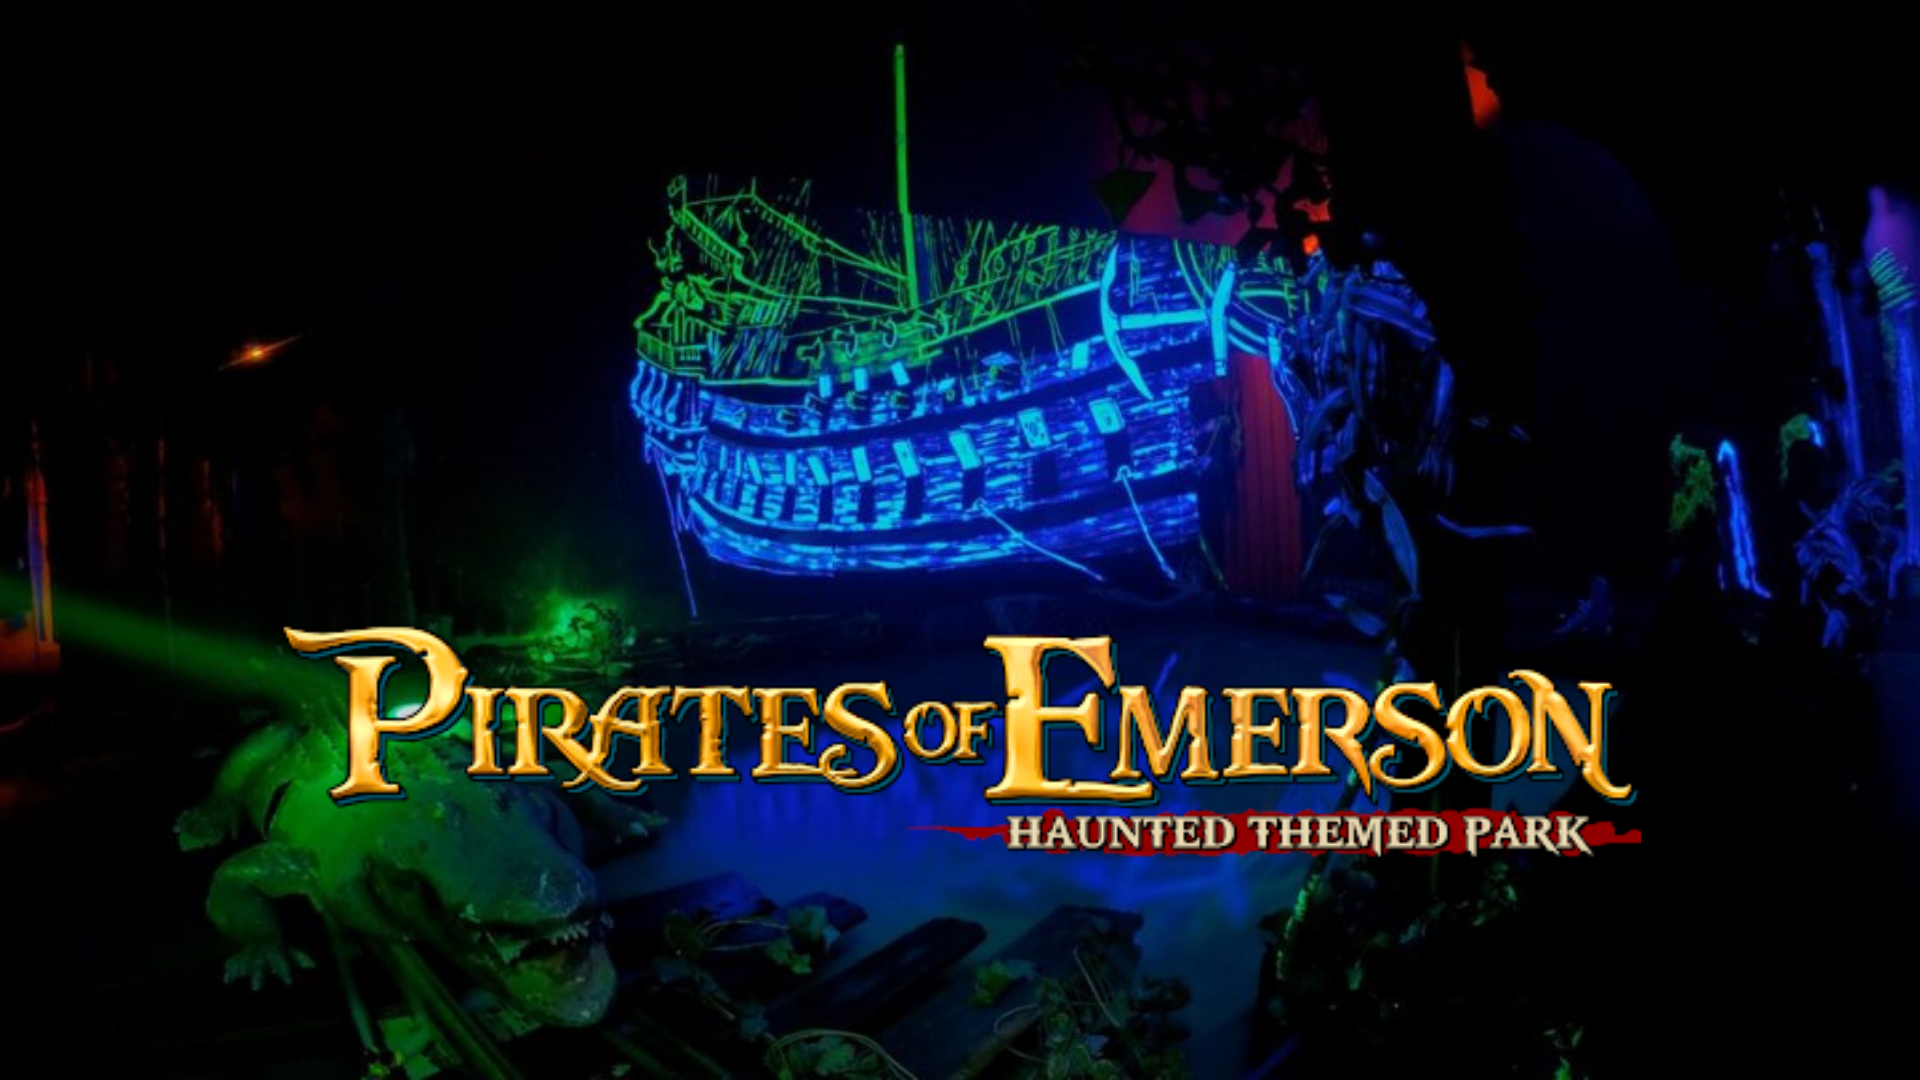 Pirates of Emerson